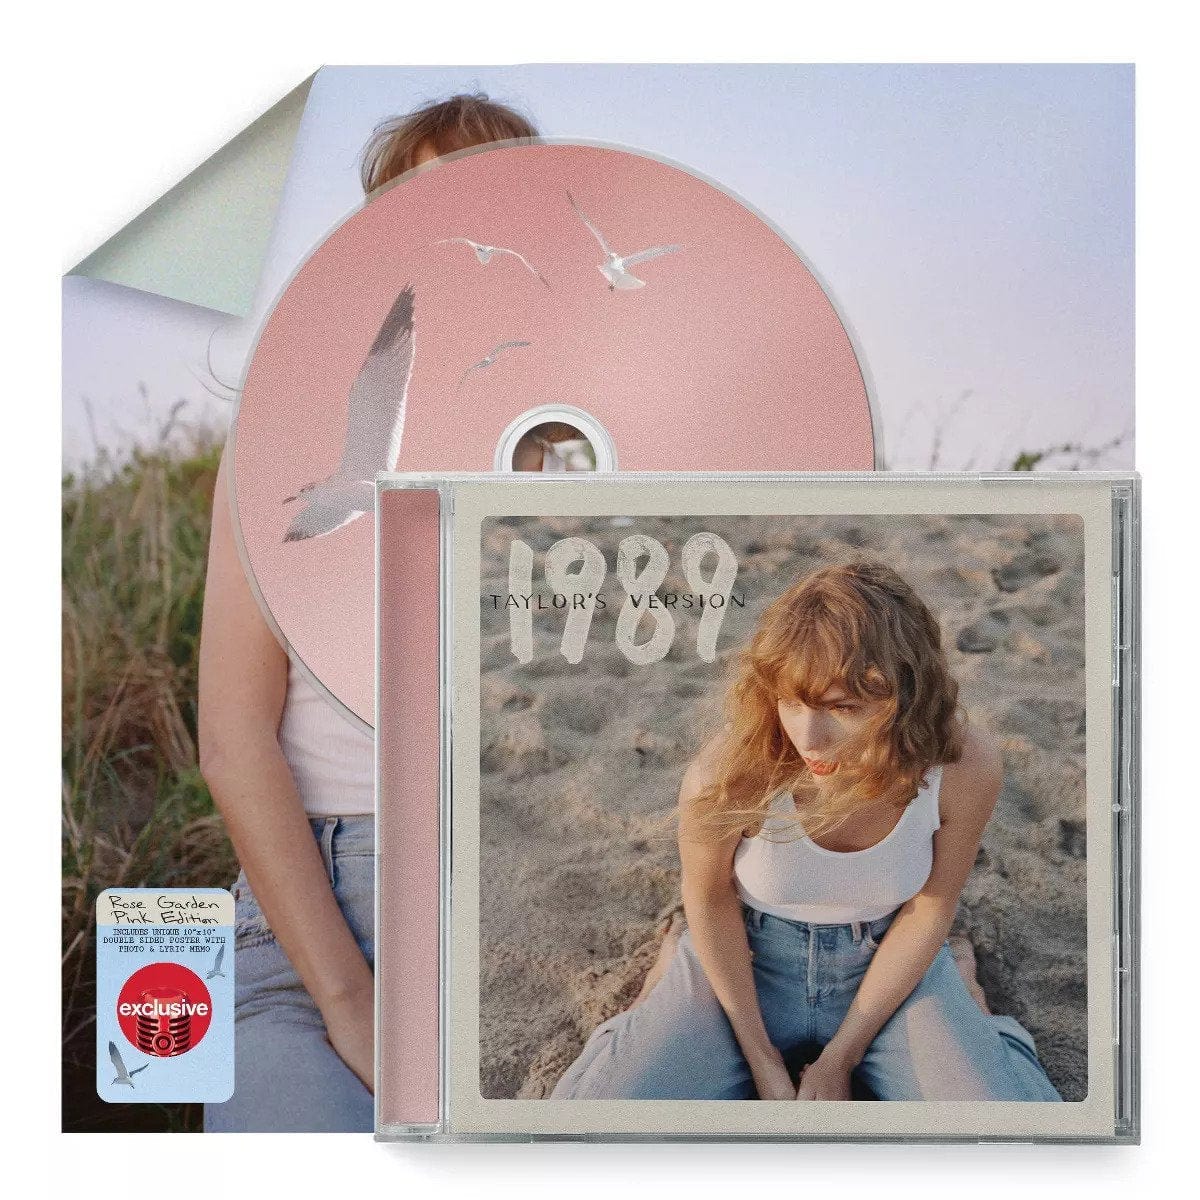 1989 (Taylor's Version)(Rose Garden Pink CD) - Taylor Swift [CD] – Golden  Discs